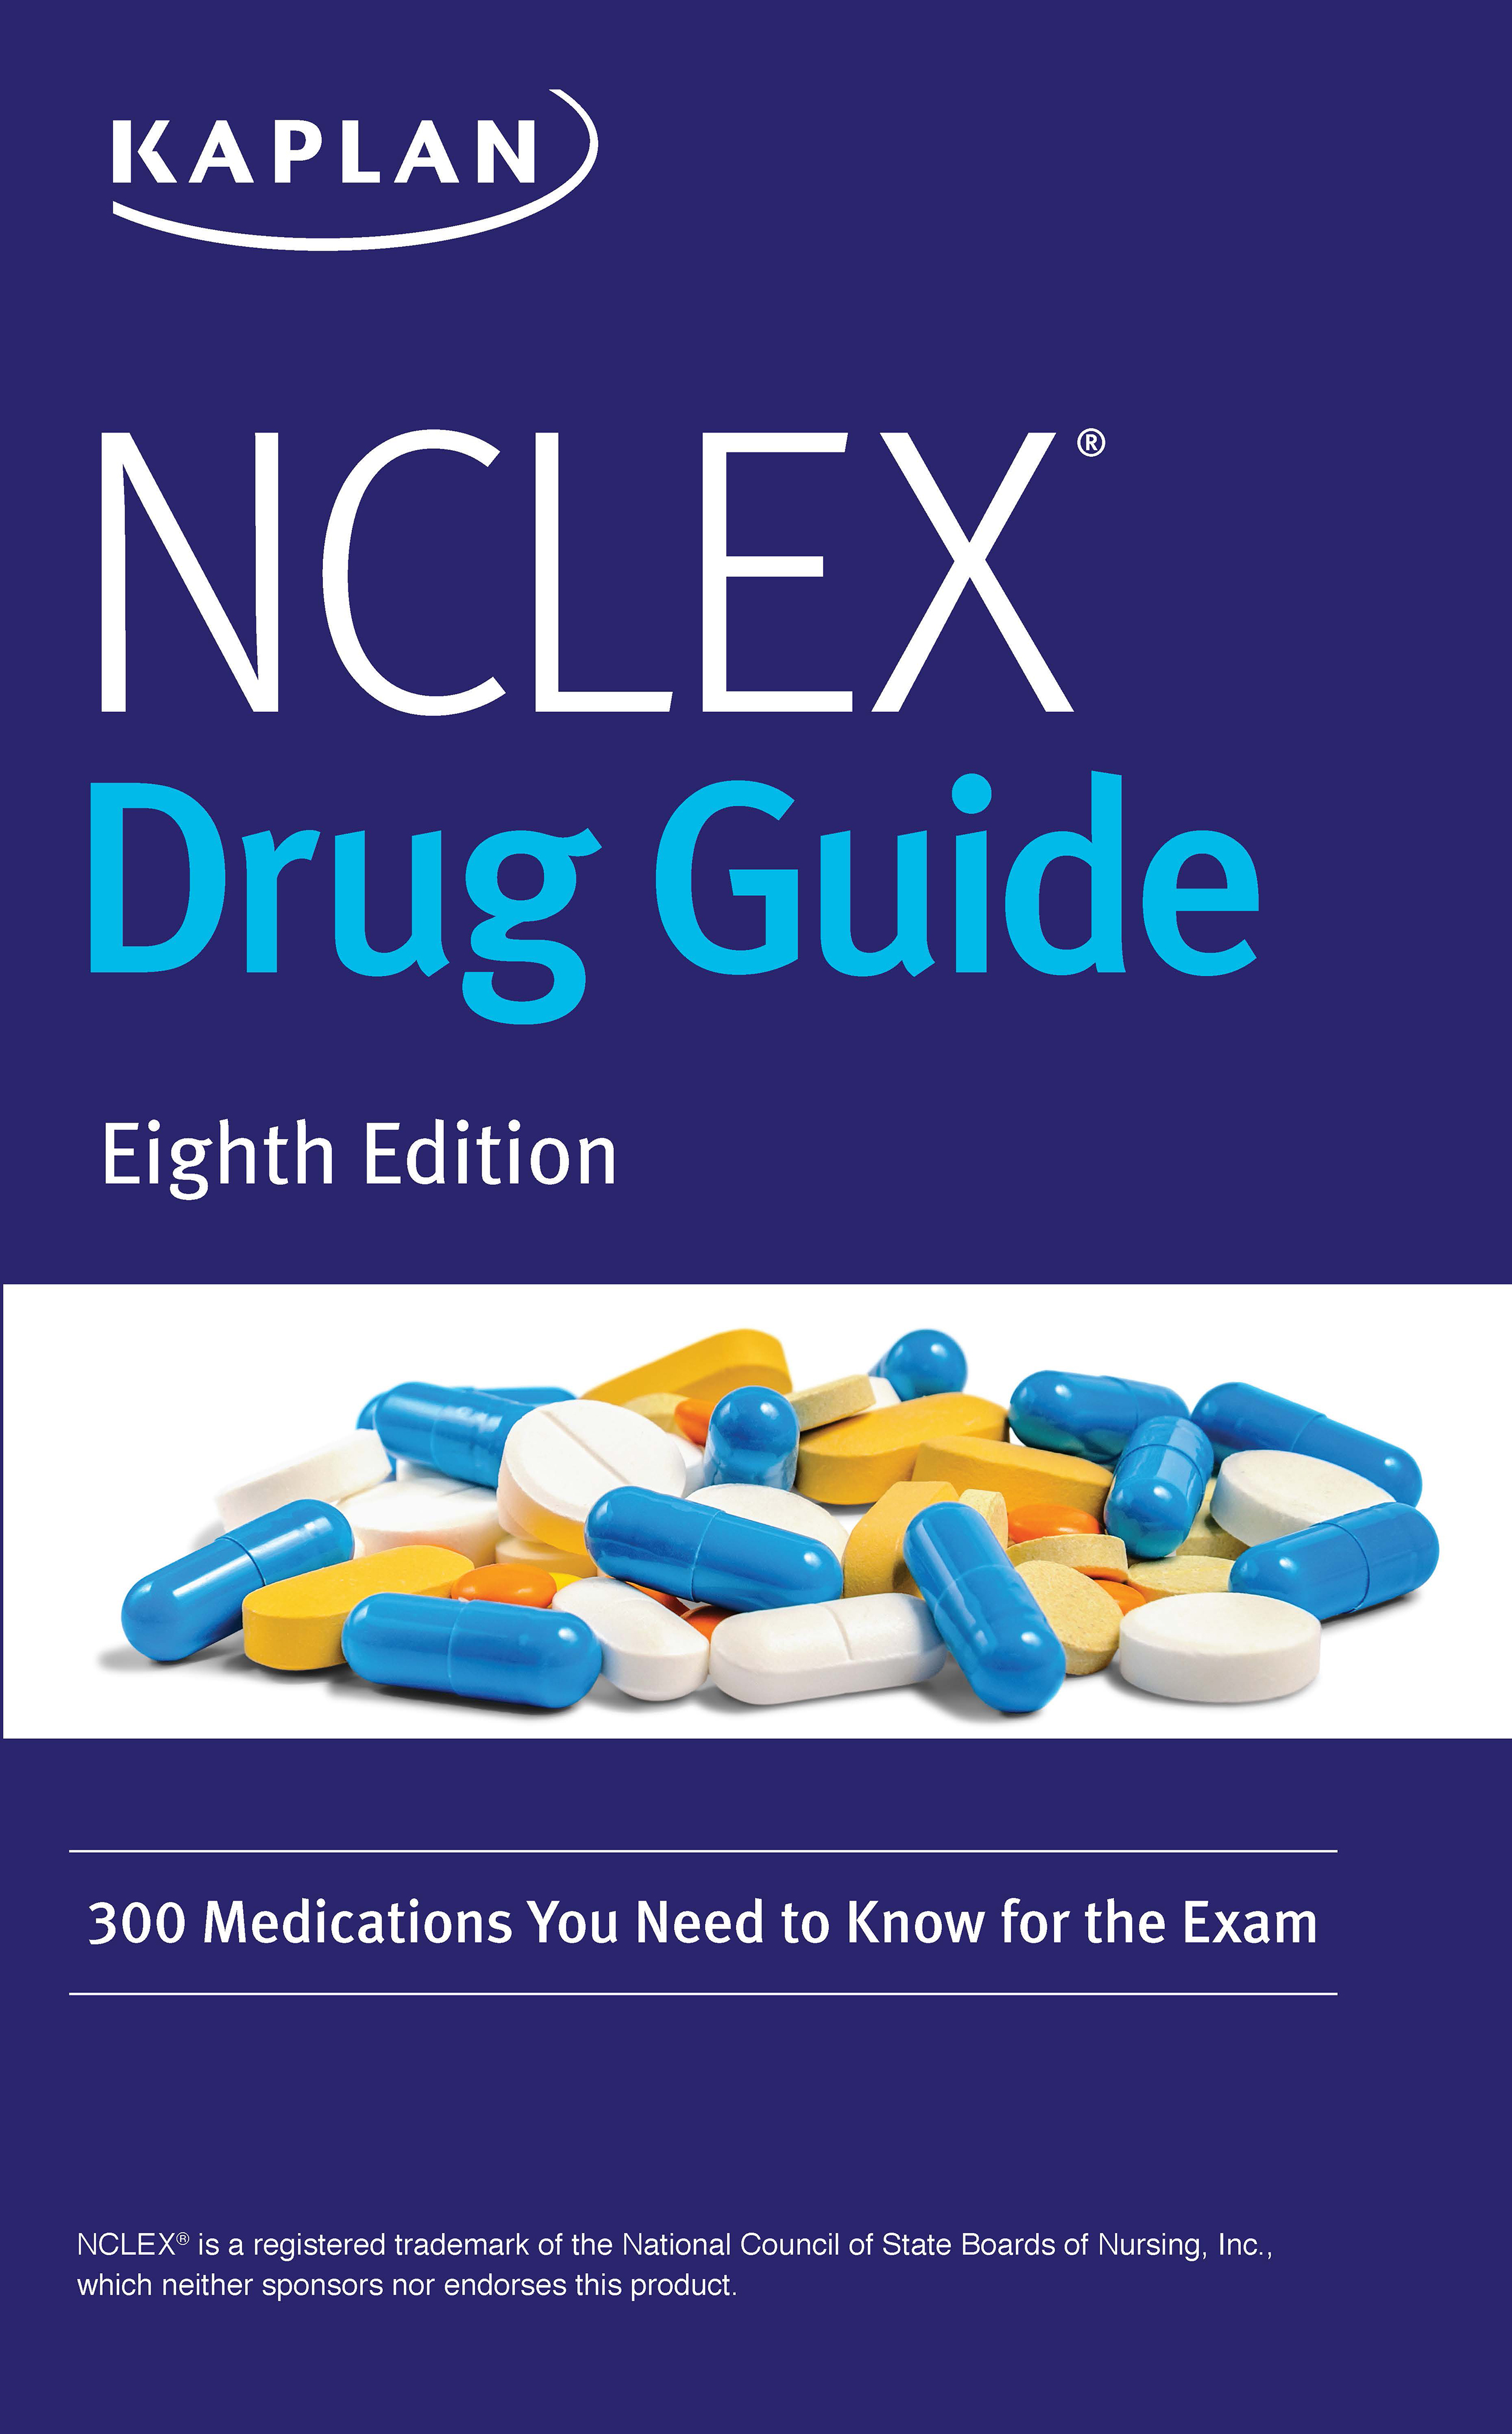 NCLEX Review Books - Best NCLEX Study Books | Kaplan Test Prep